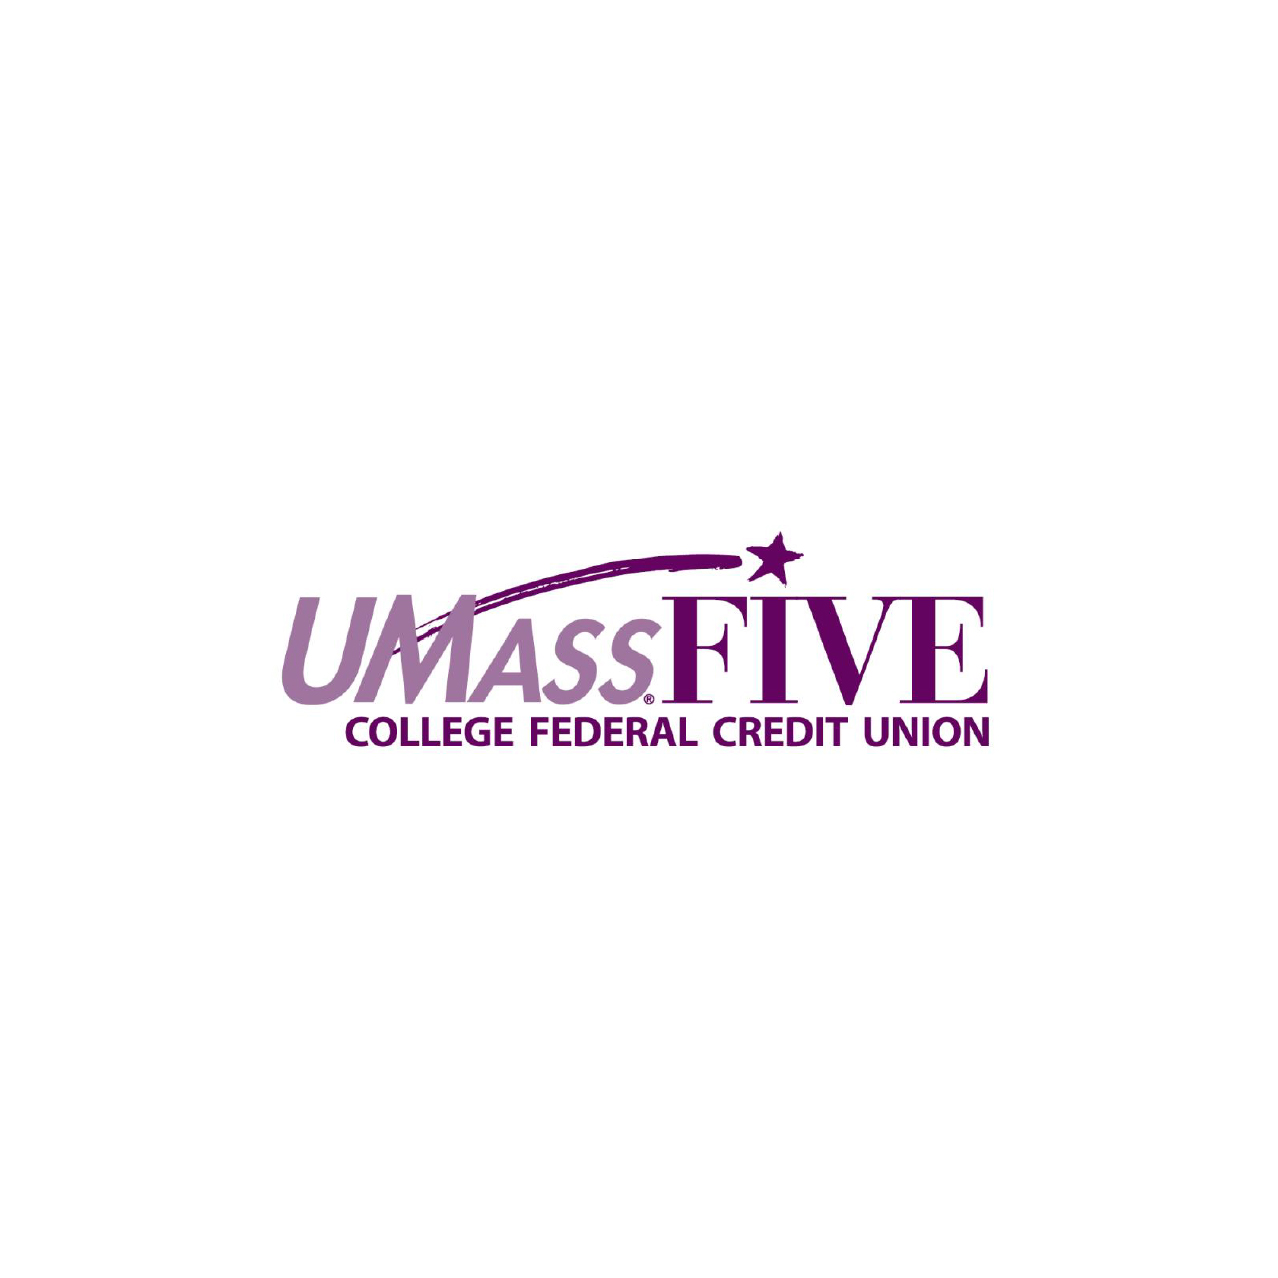 UMass Five College Federal Credit Union logo2